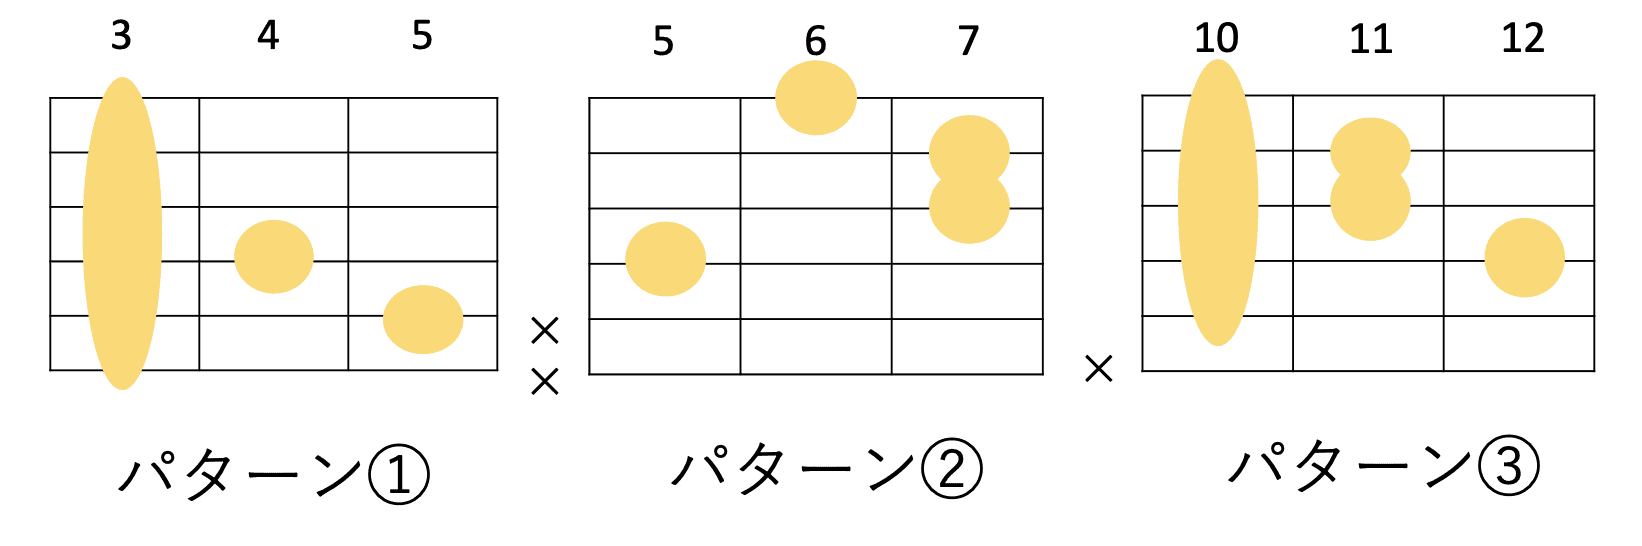 GmM7の構成音とギターコードフォーム